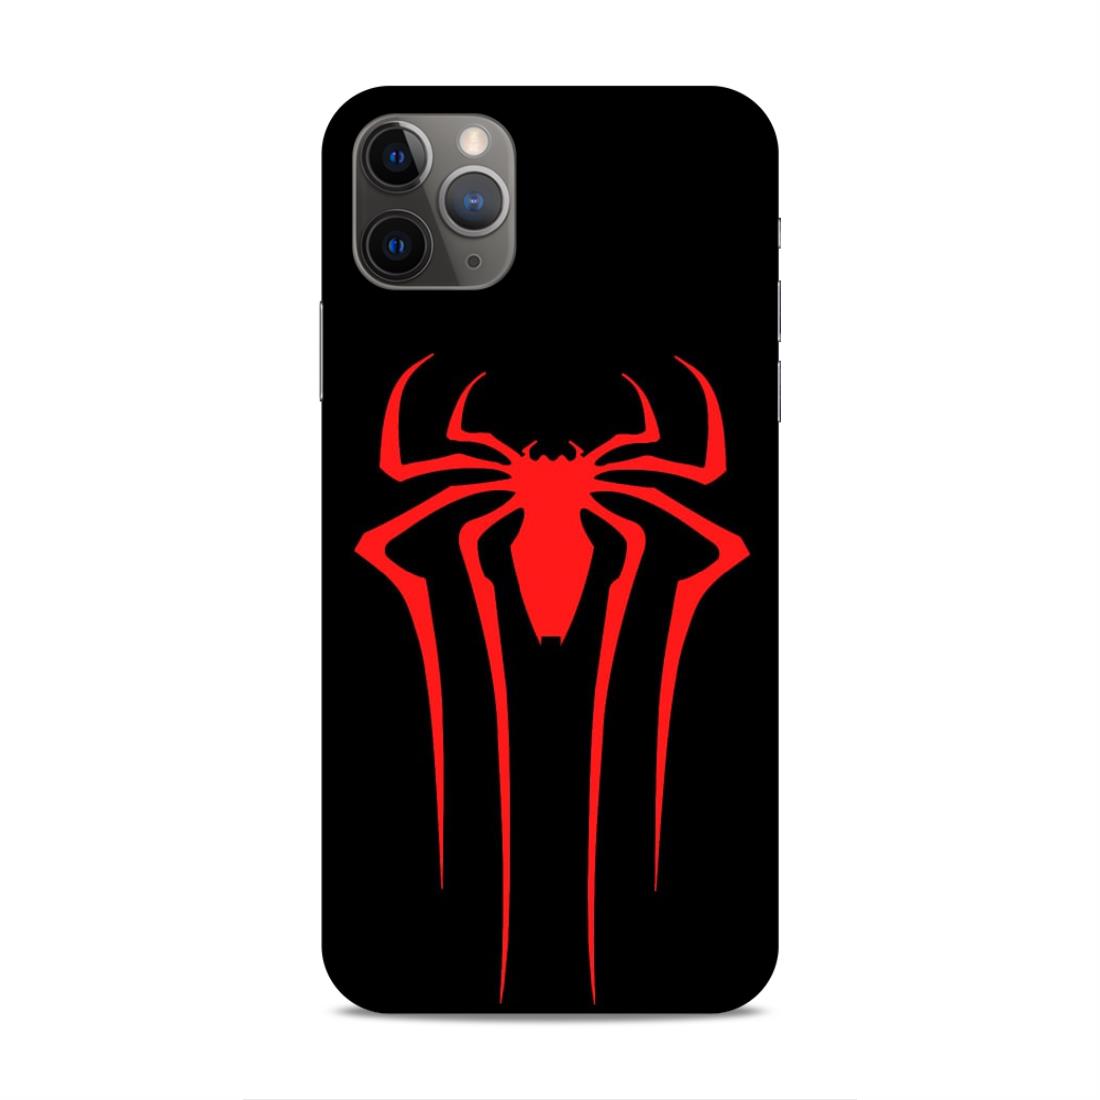 Spiderman Symbol Hard Back Case For Apple iPhone 11 Pro Max